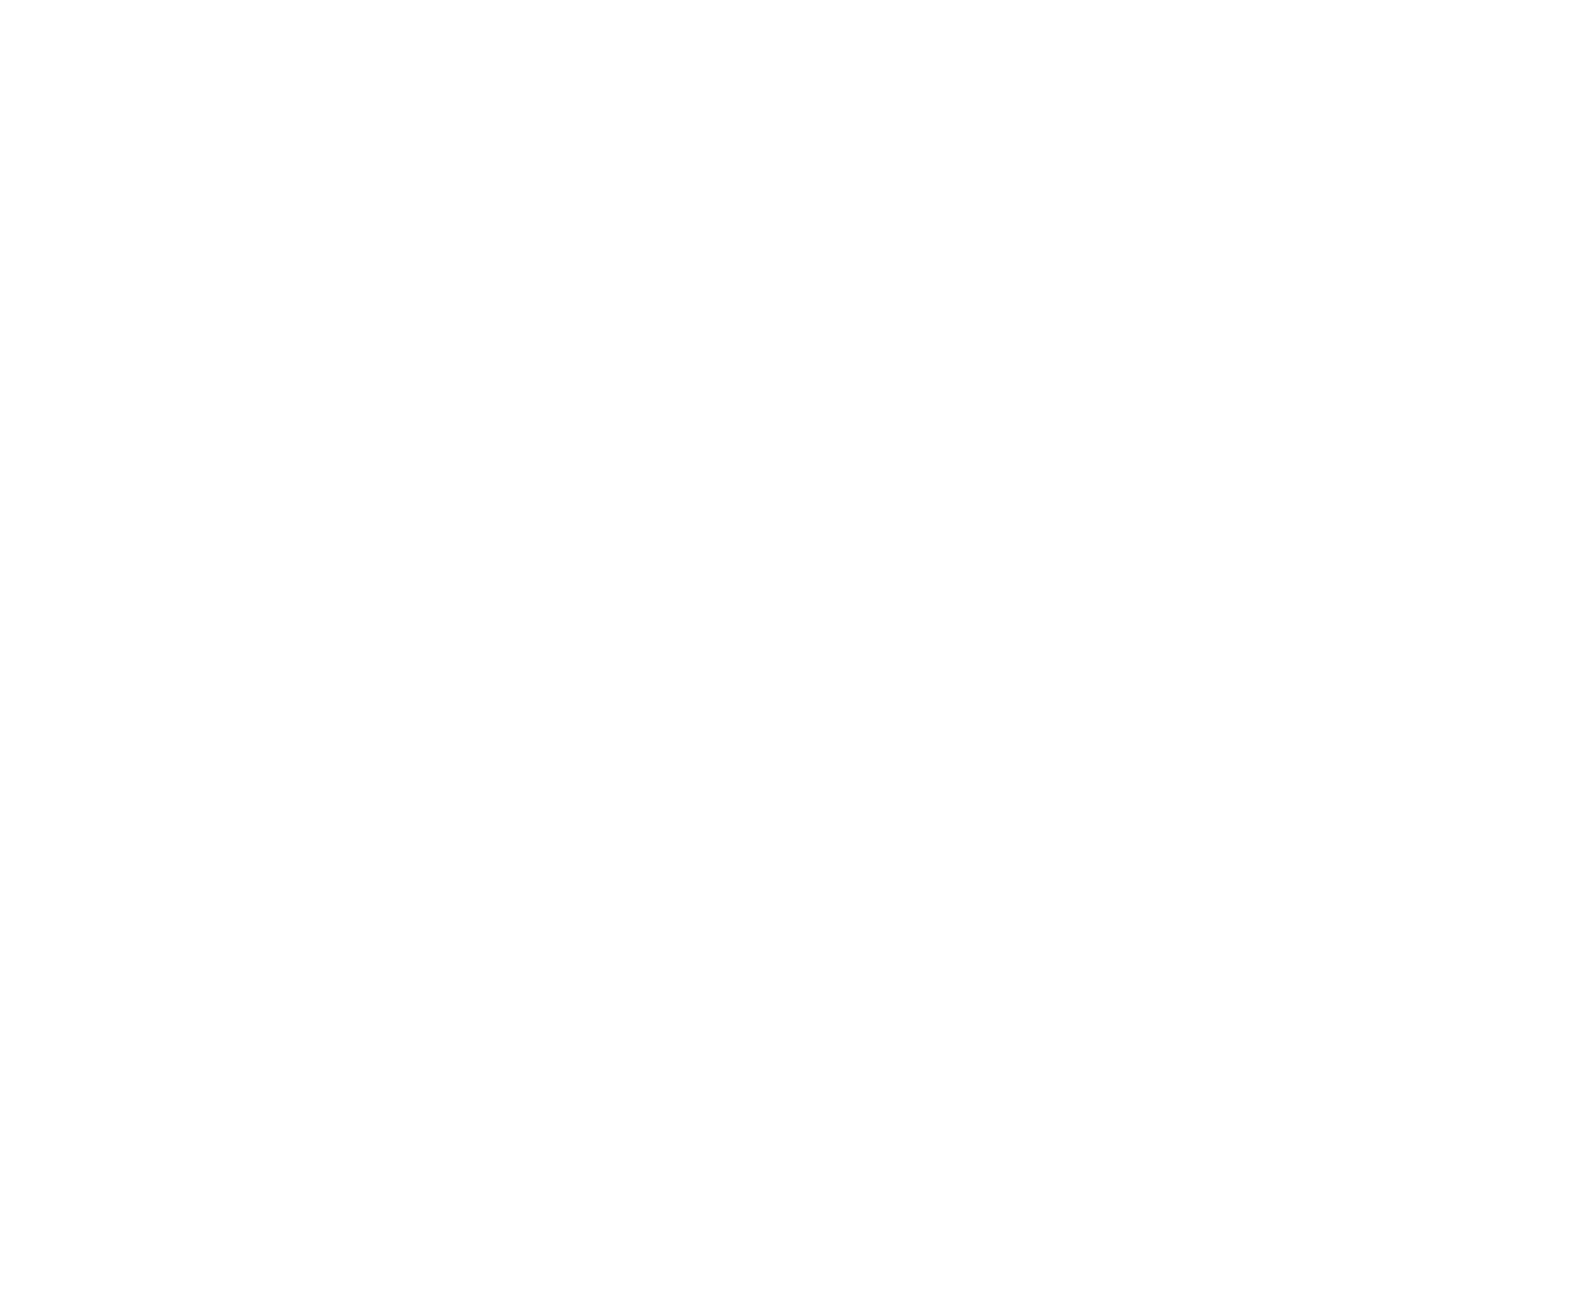 NWTN Inc. logo large for dark backgrounds (transparent PNG)